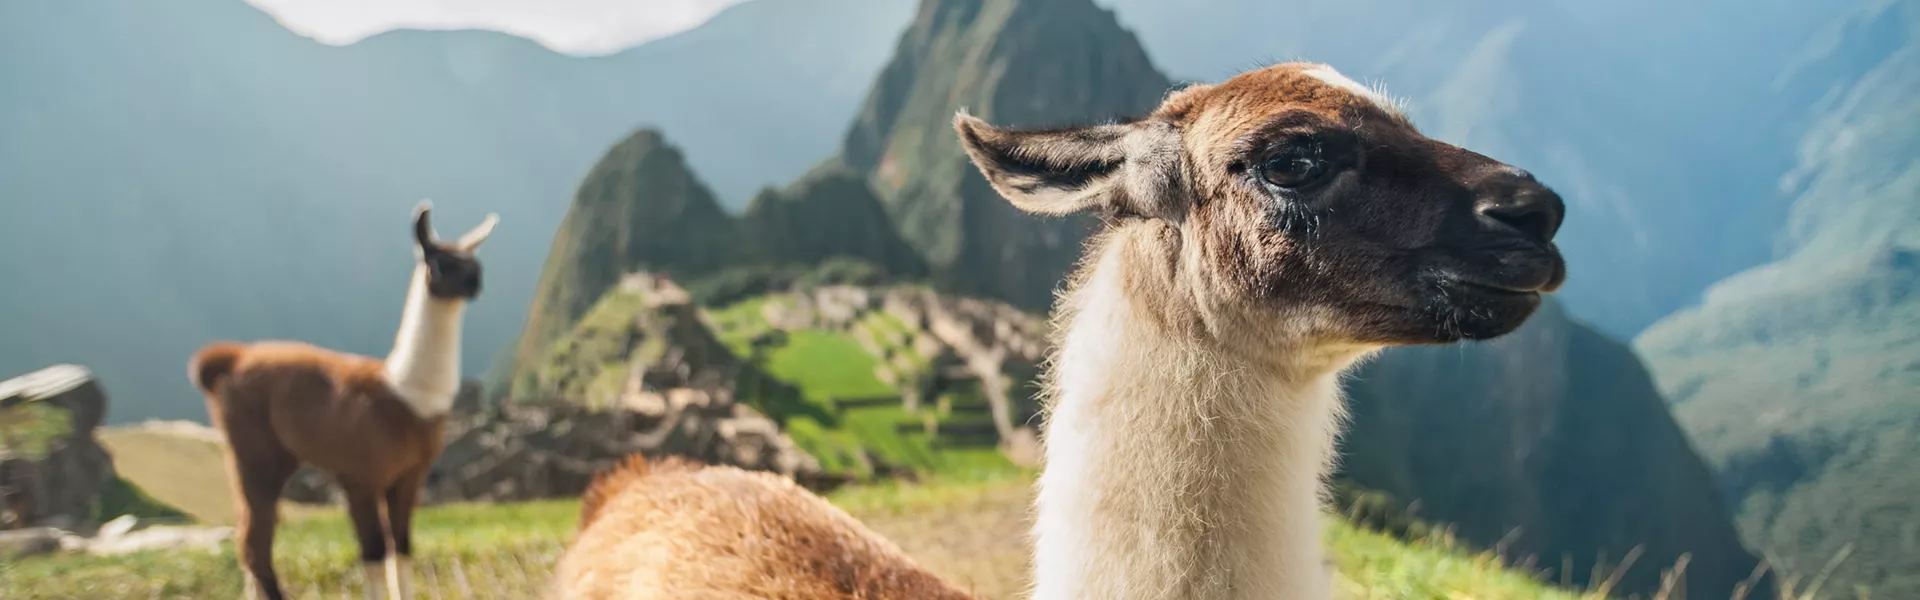 Llama in the Peruvian mountains